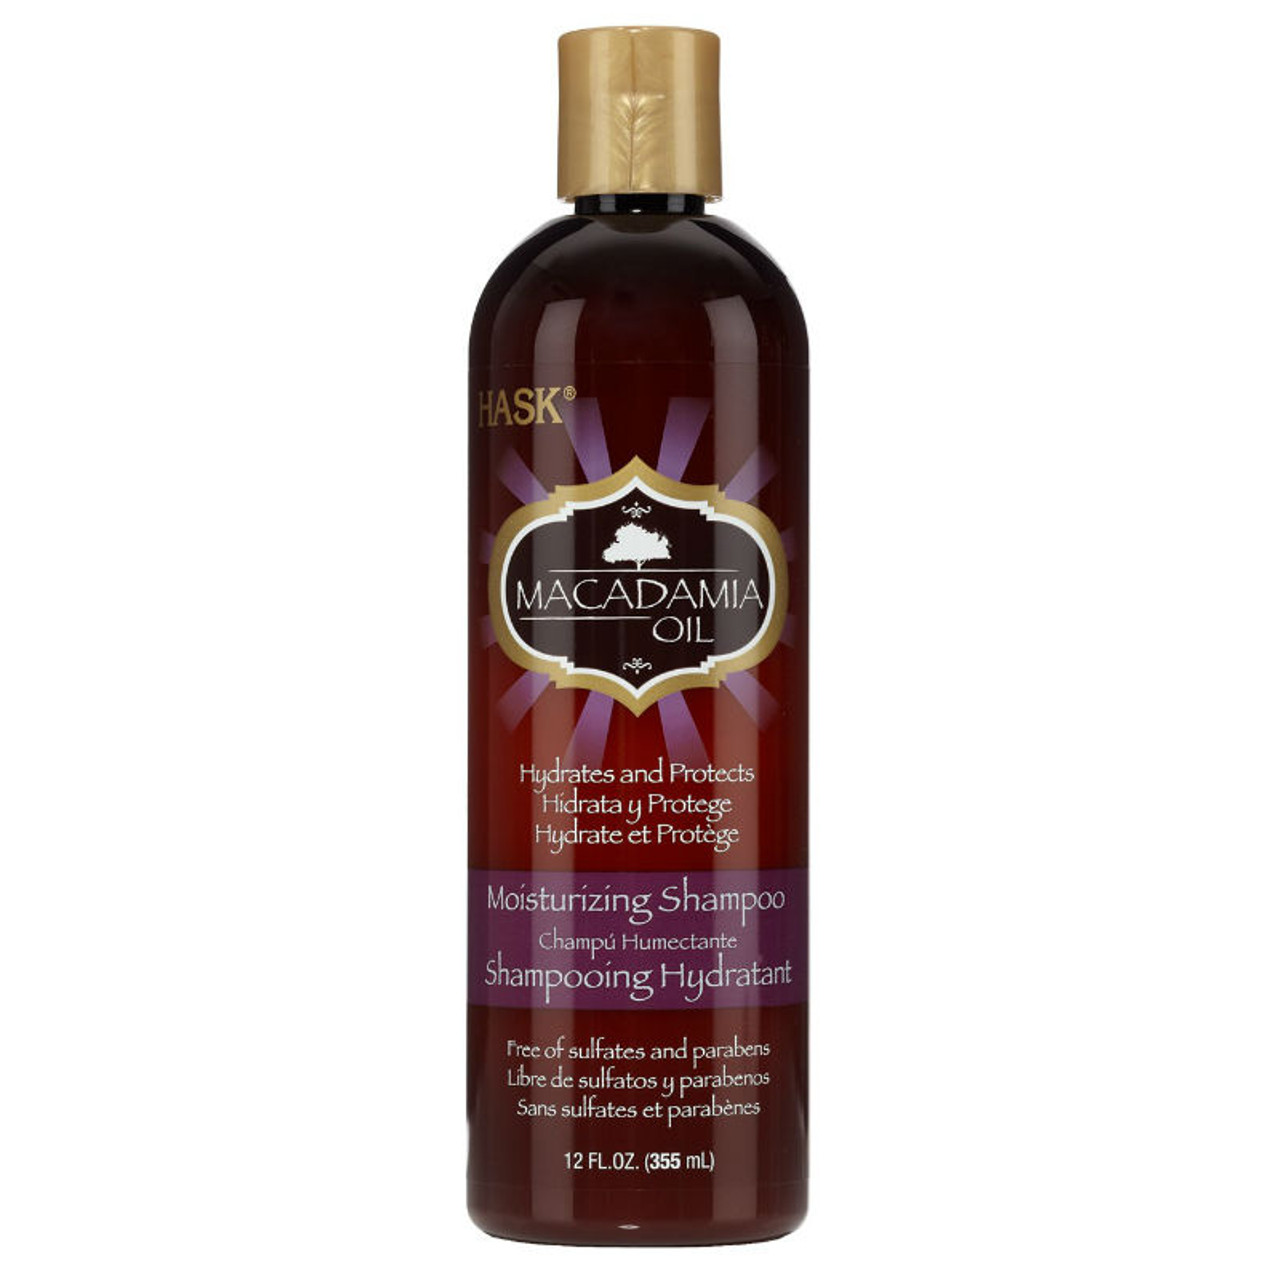 HASK Oil Moisturizing Shampoo (12 oz.) - NaturallyCurly